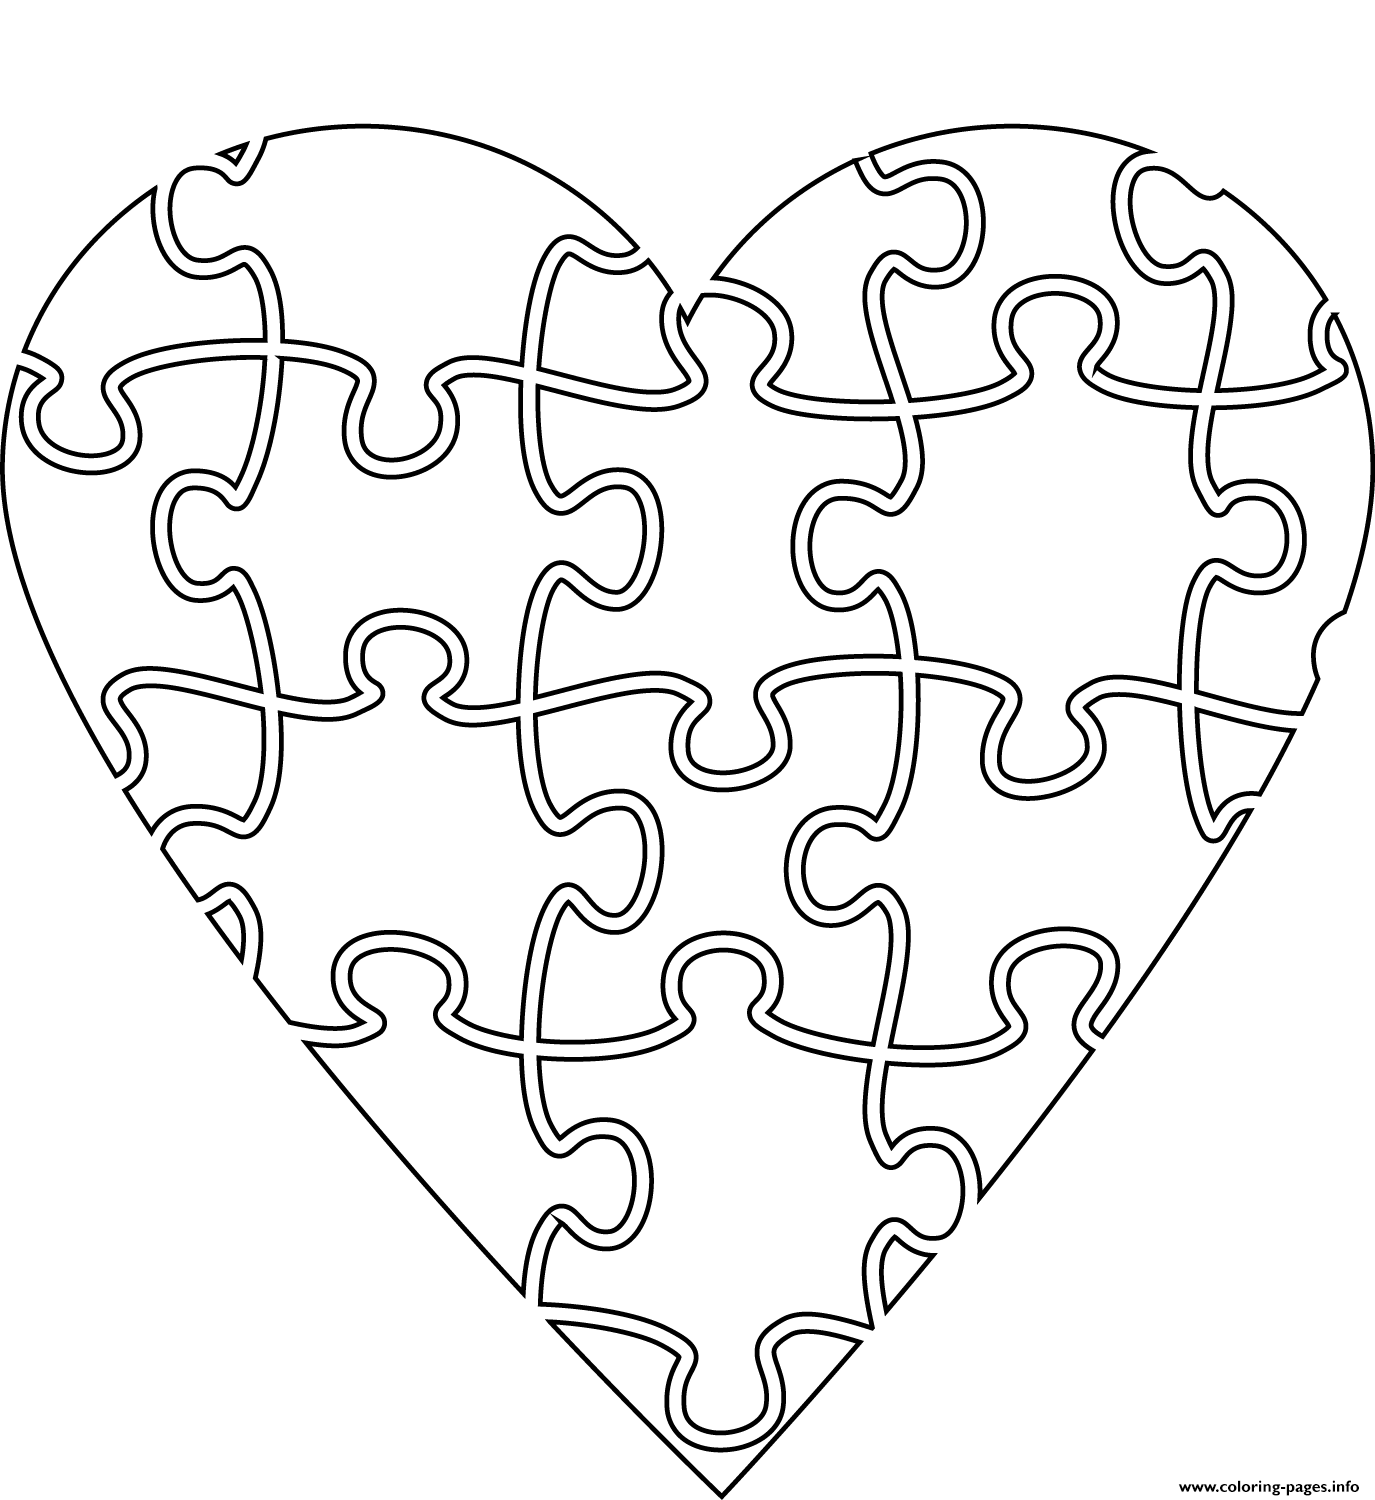 Heart Jigsaw coloring